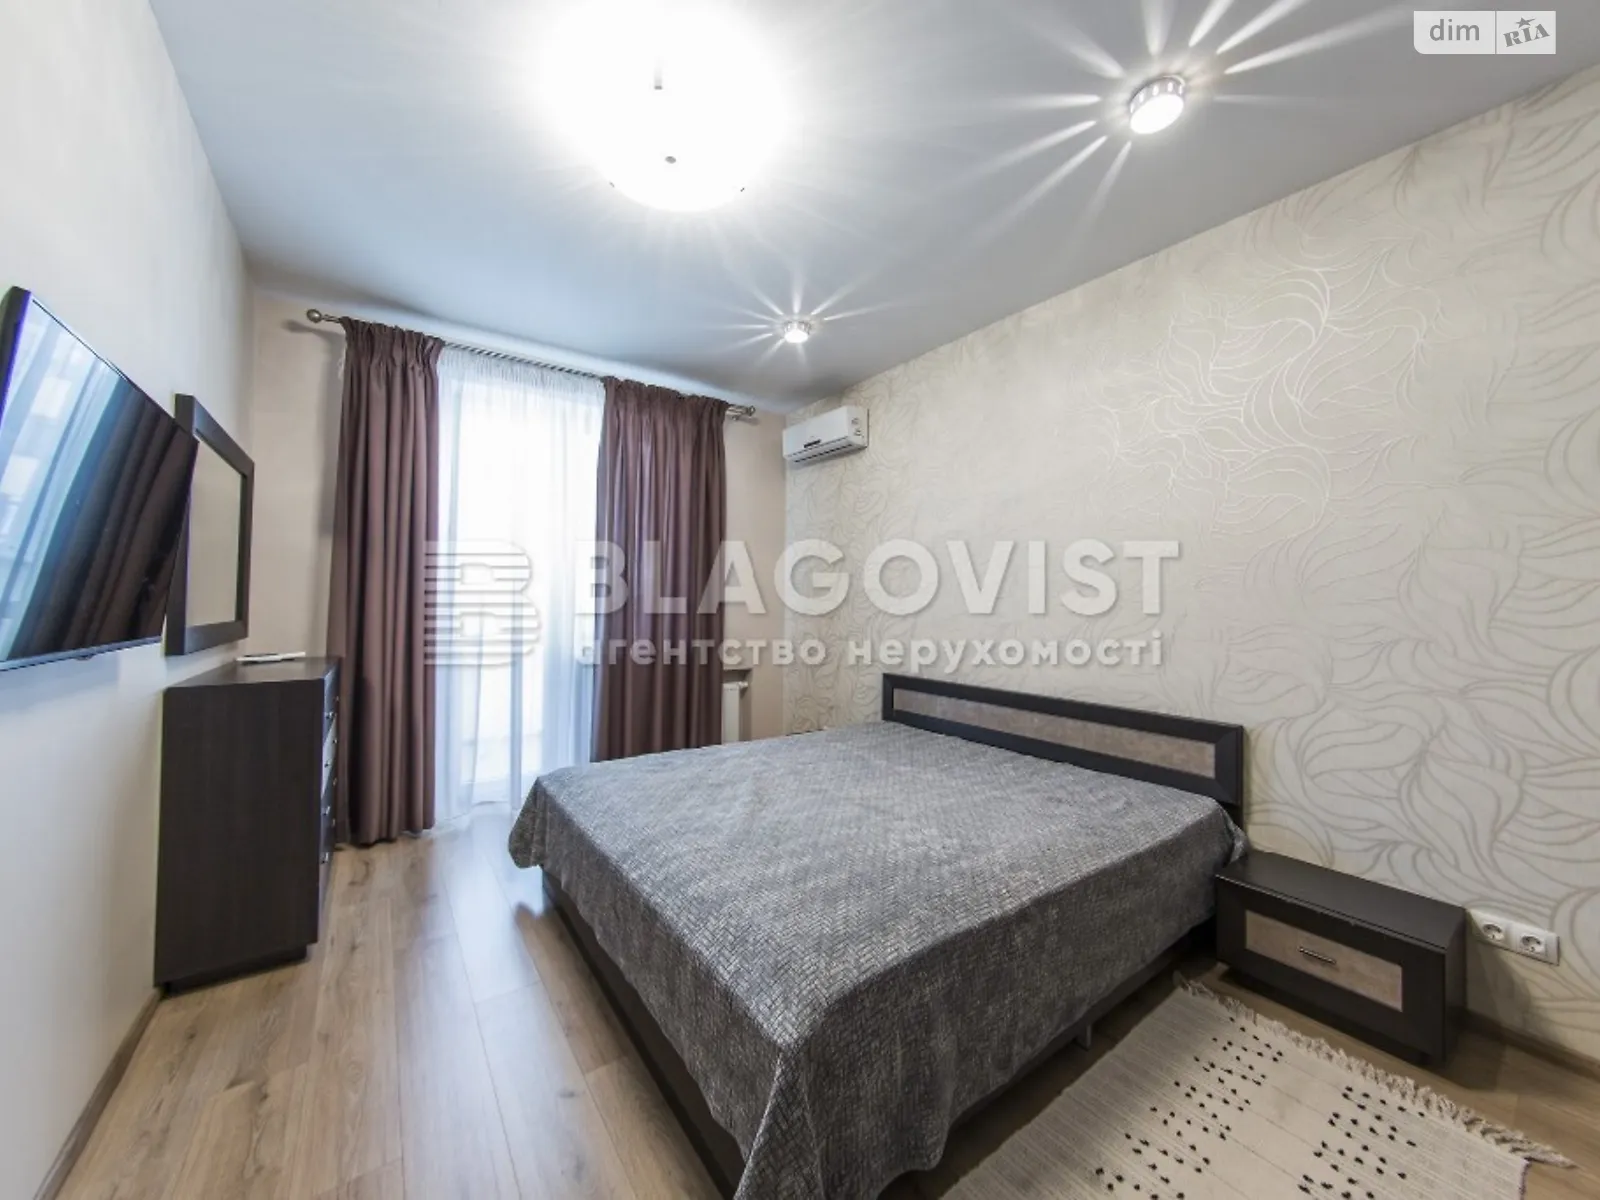 Продается 3-комнатная квартира 110.7 кв. м в Киеве, ул. Вячеслава Черновола, 55 - фото 1